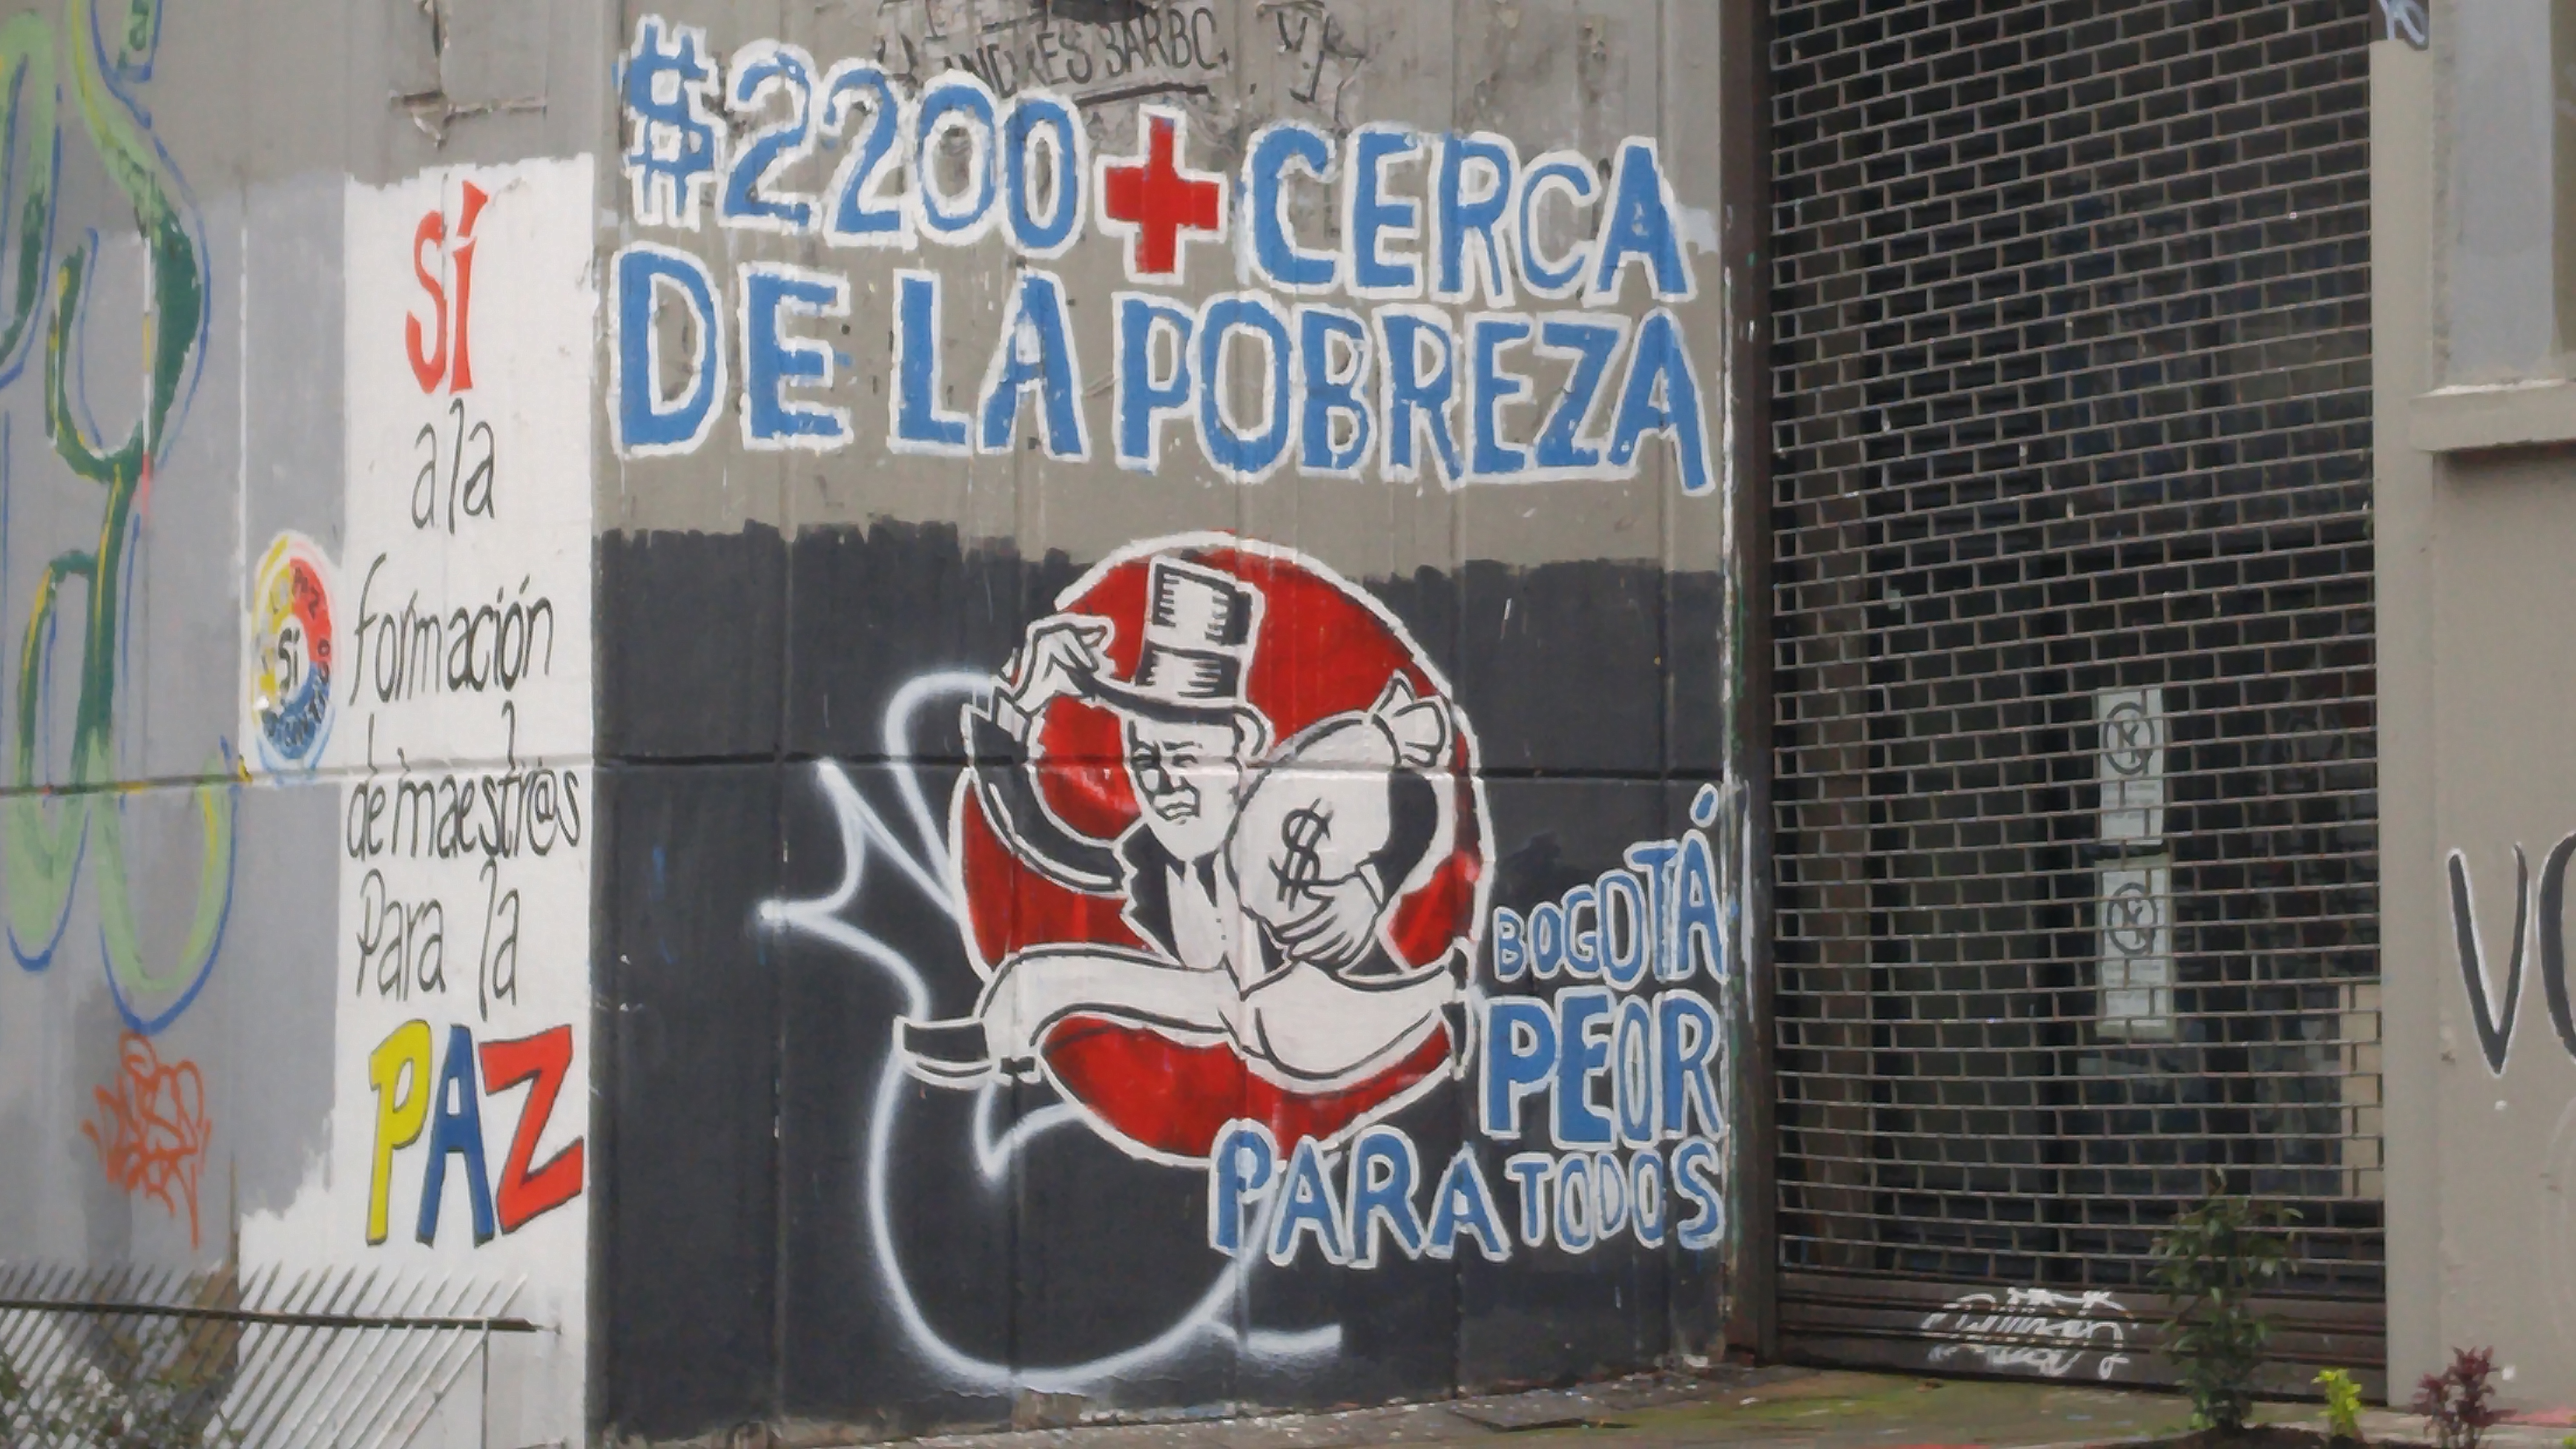 Graffiti satirizing Enrique Peñalosa after recent fare increase